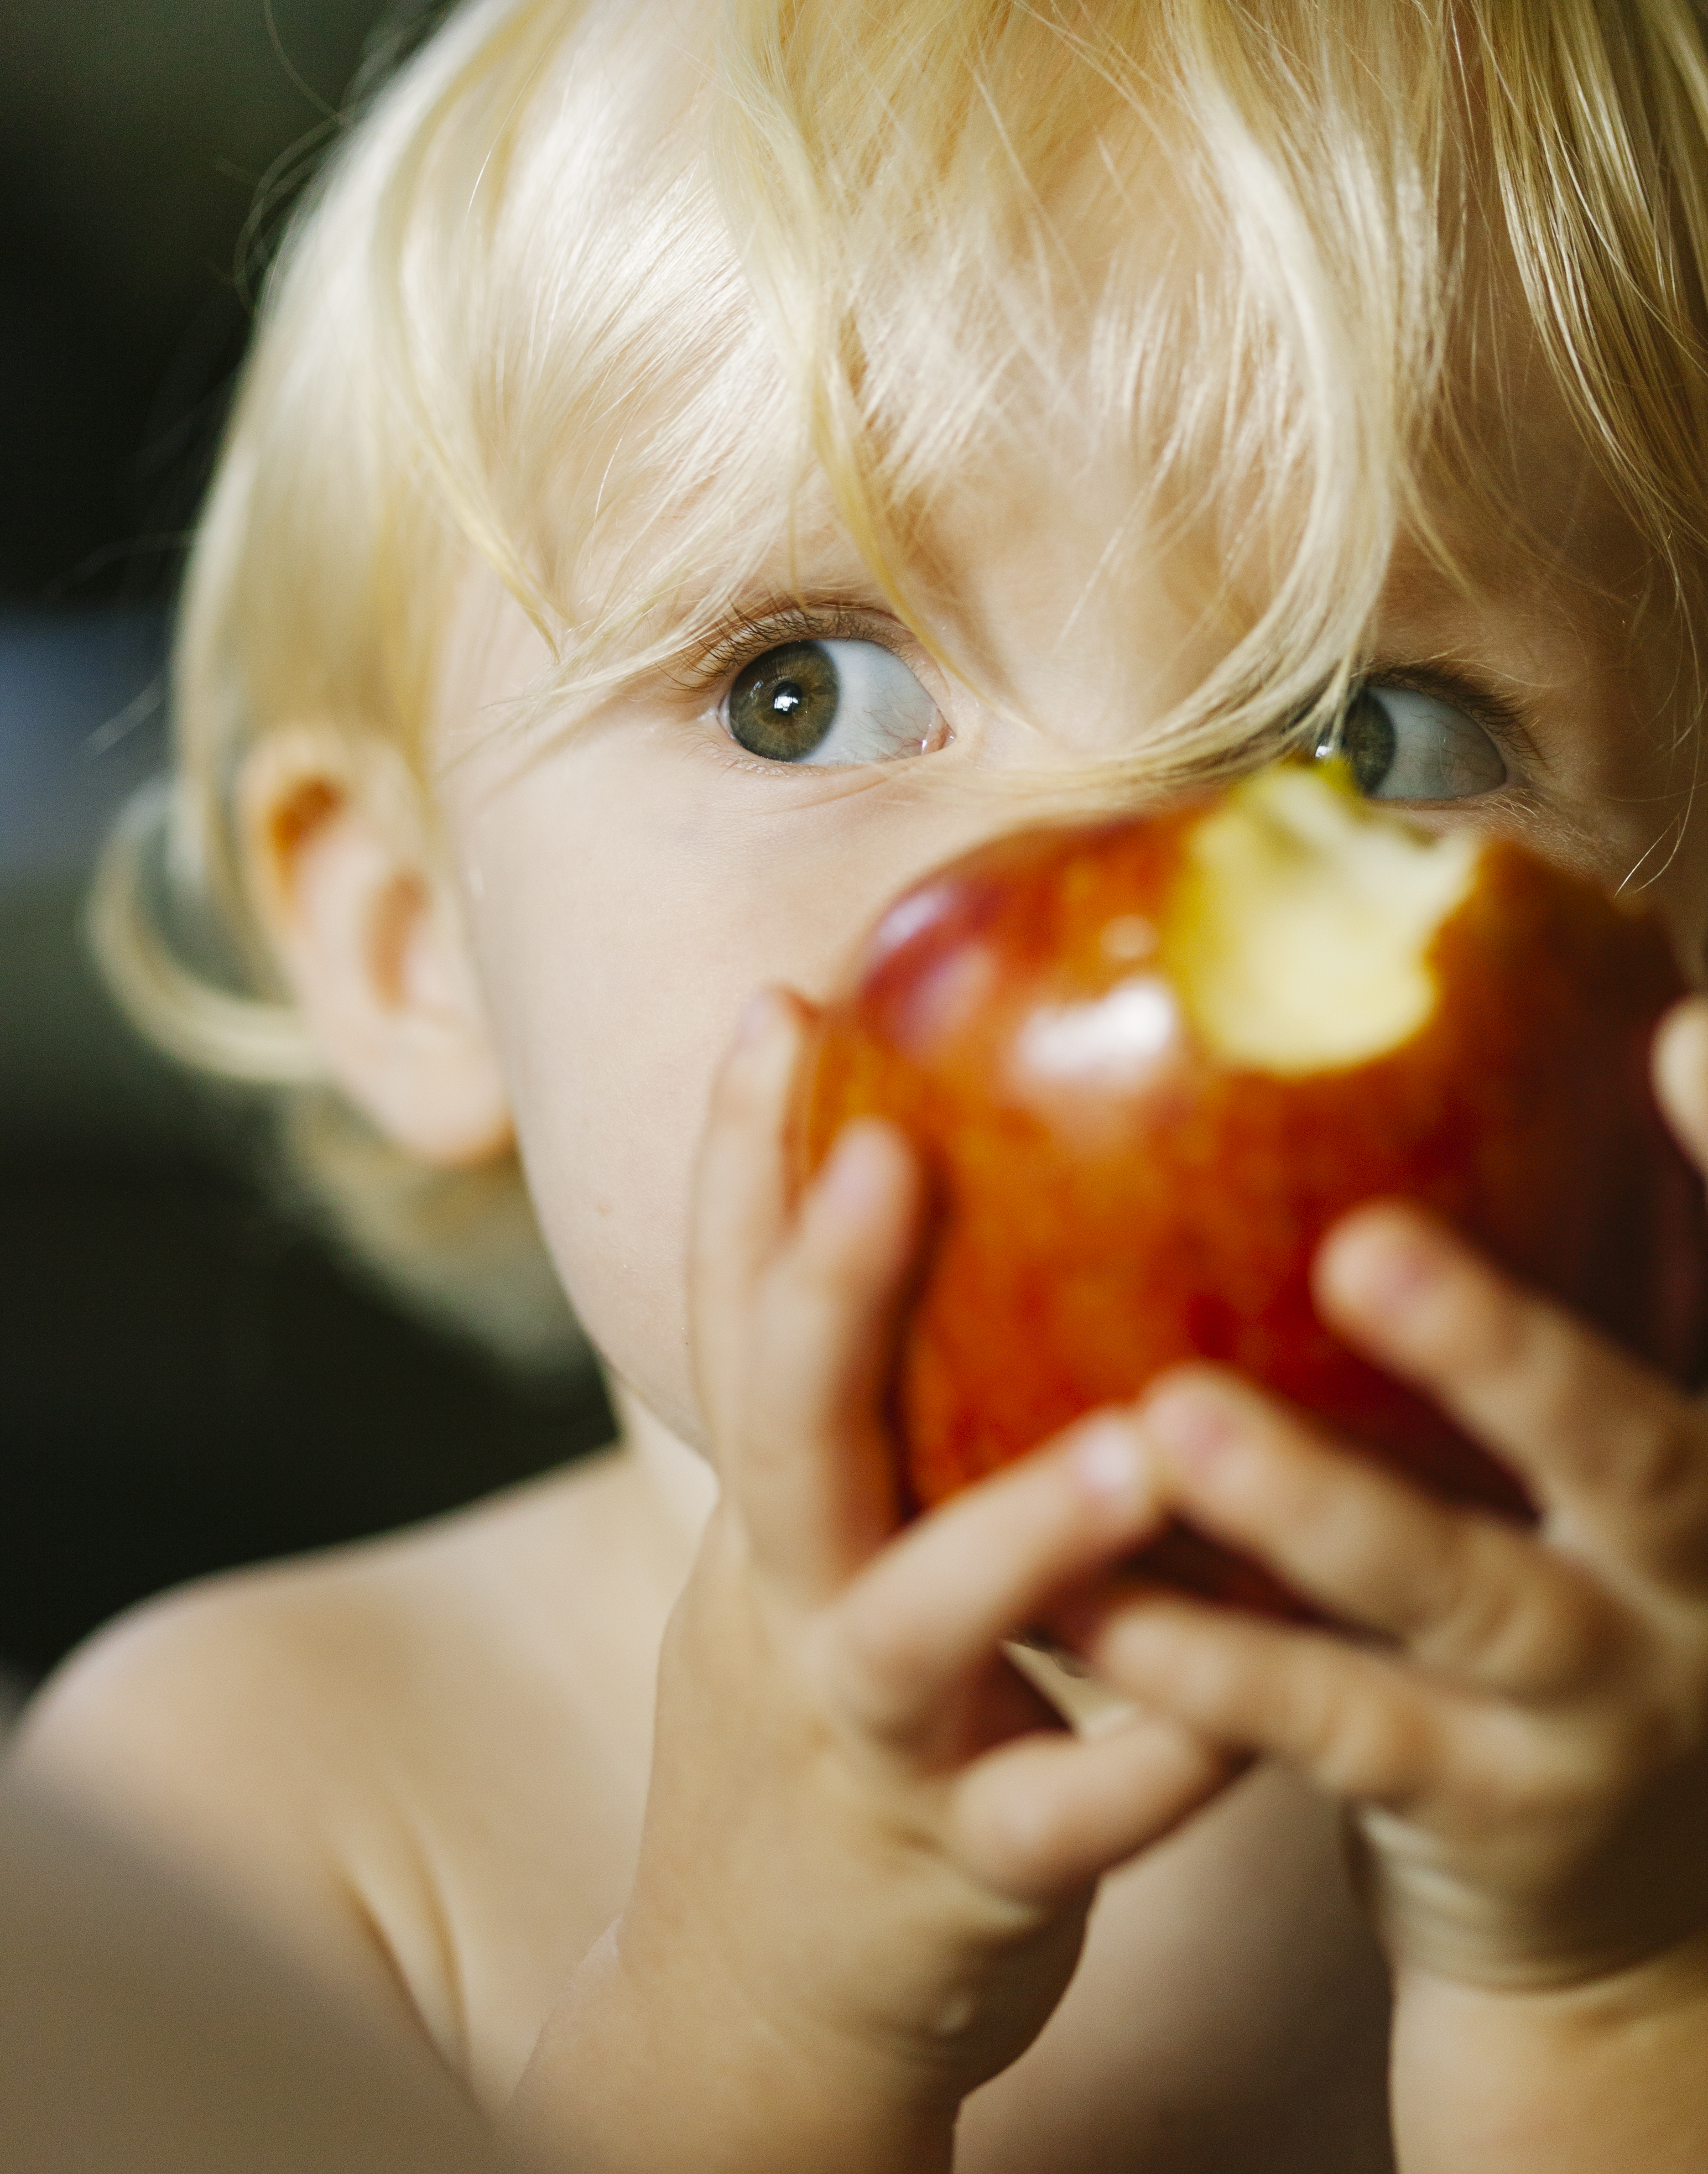 baby girl eating an apple